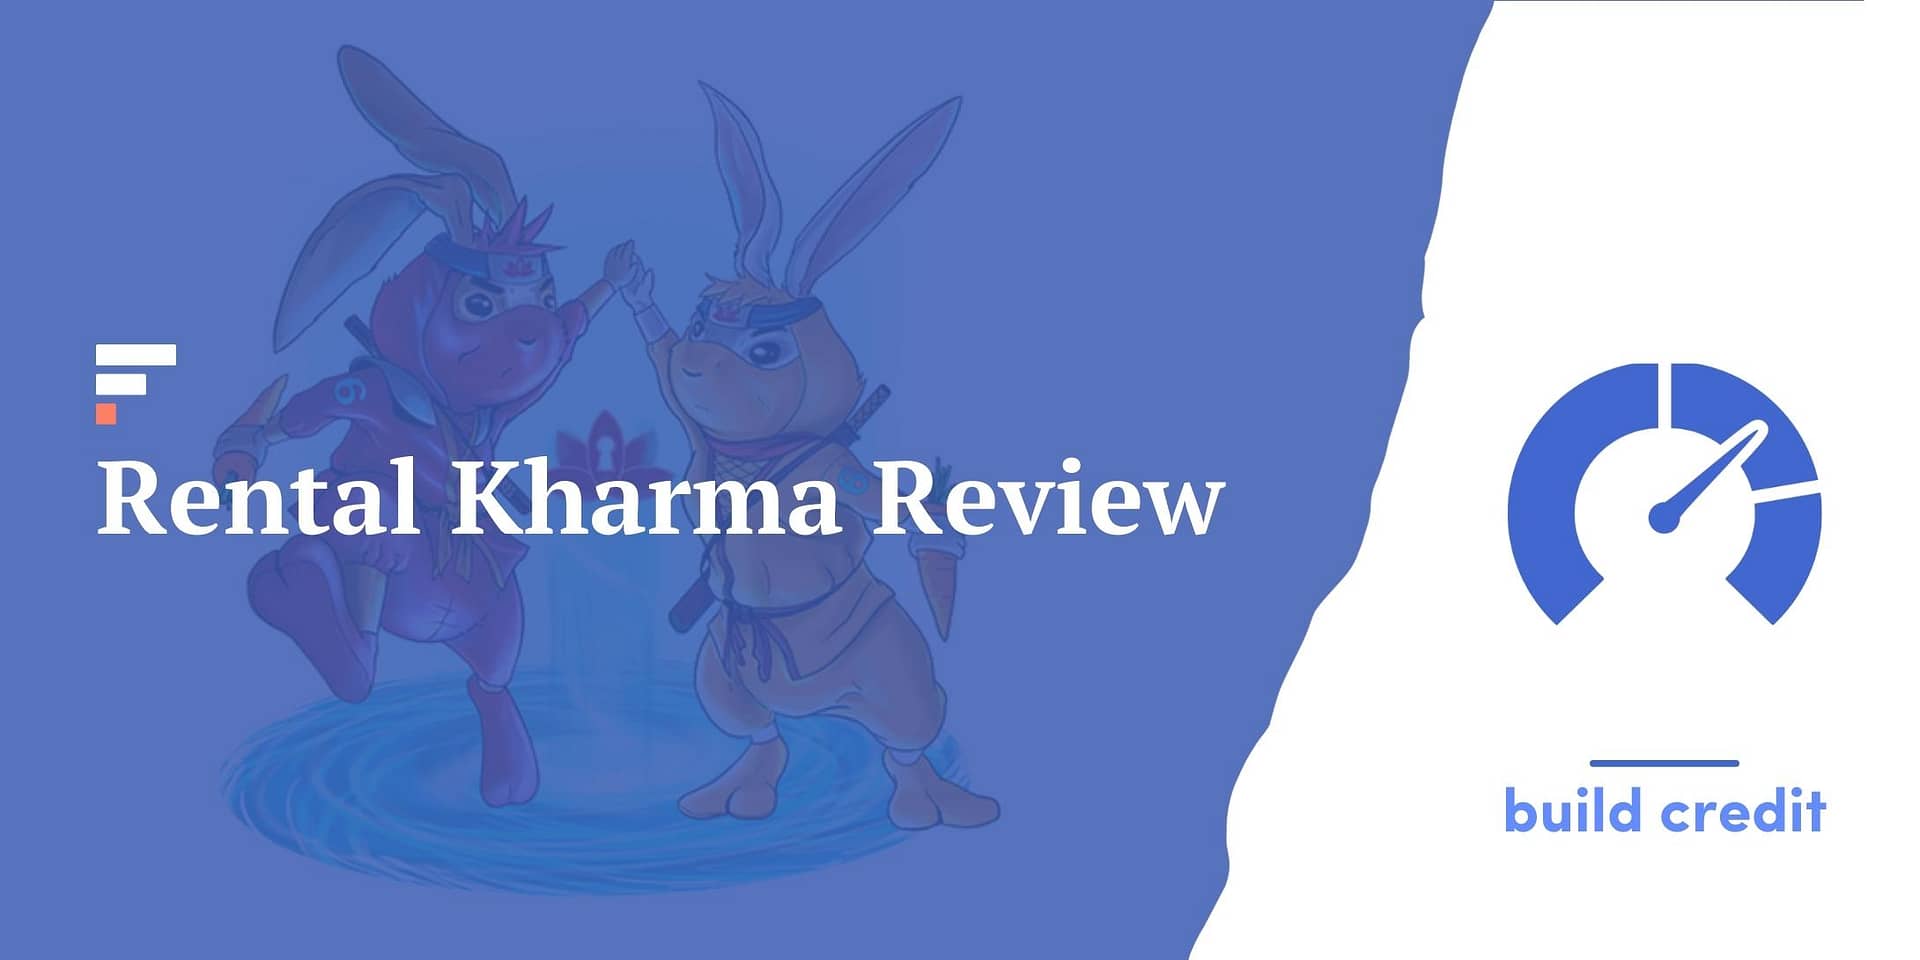 Rental Kharma Review